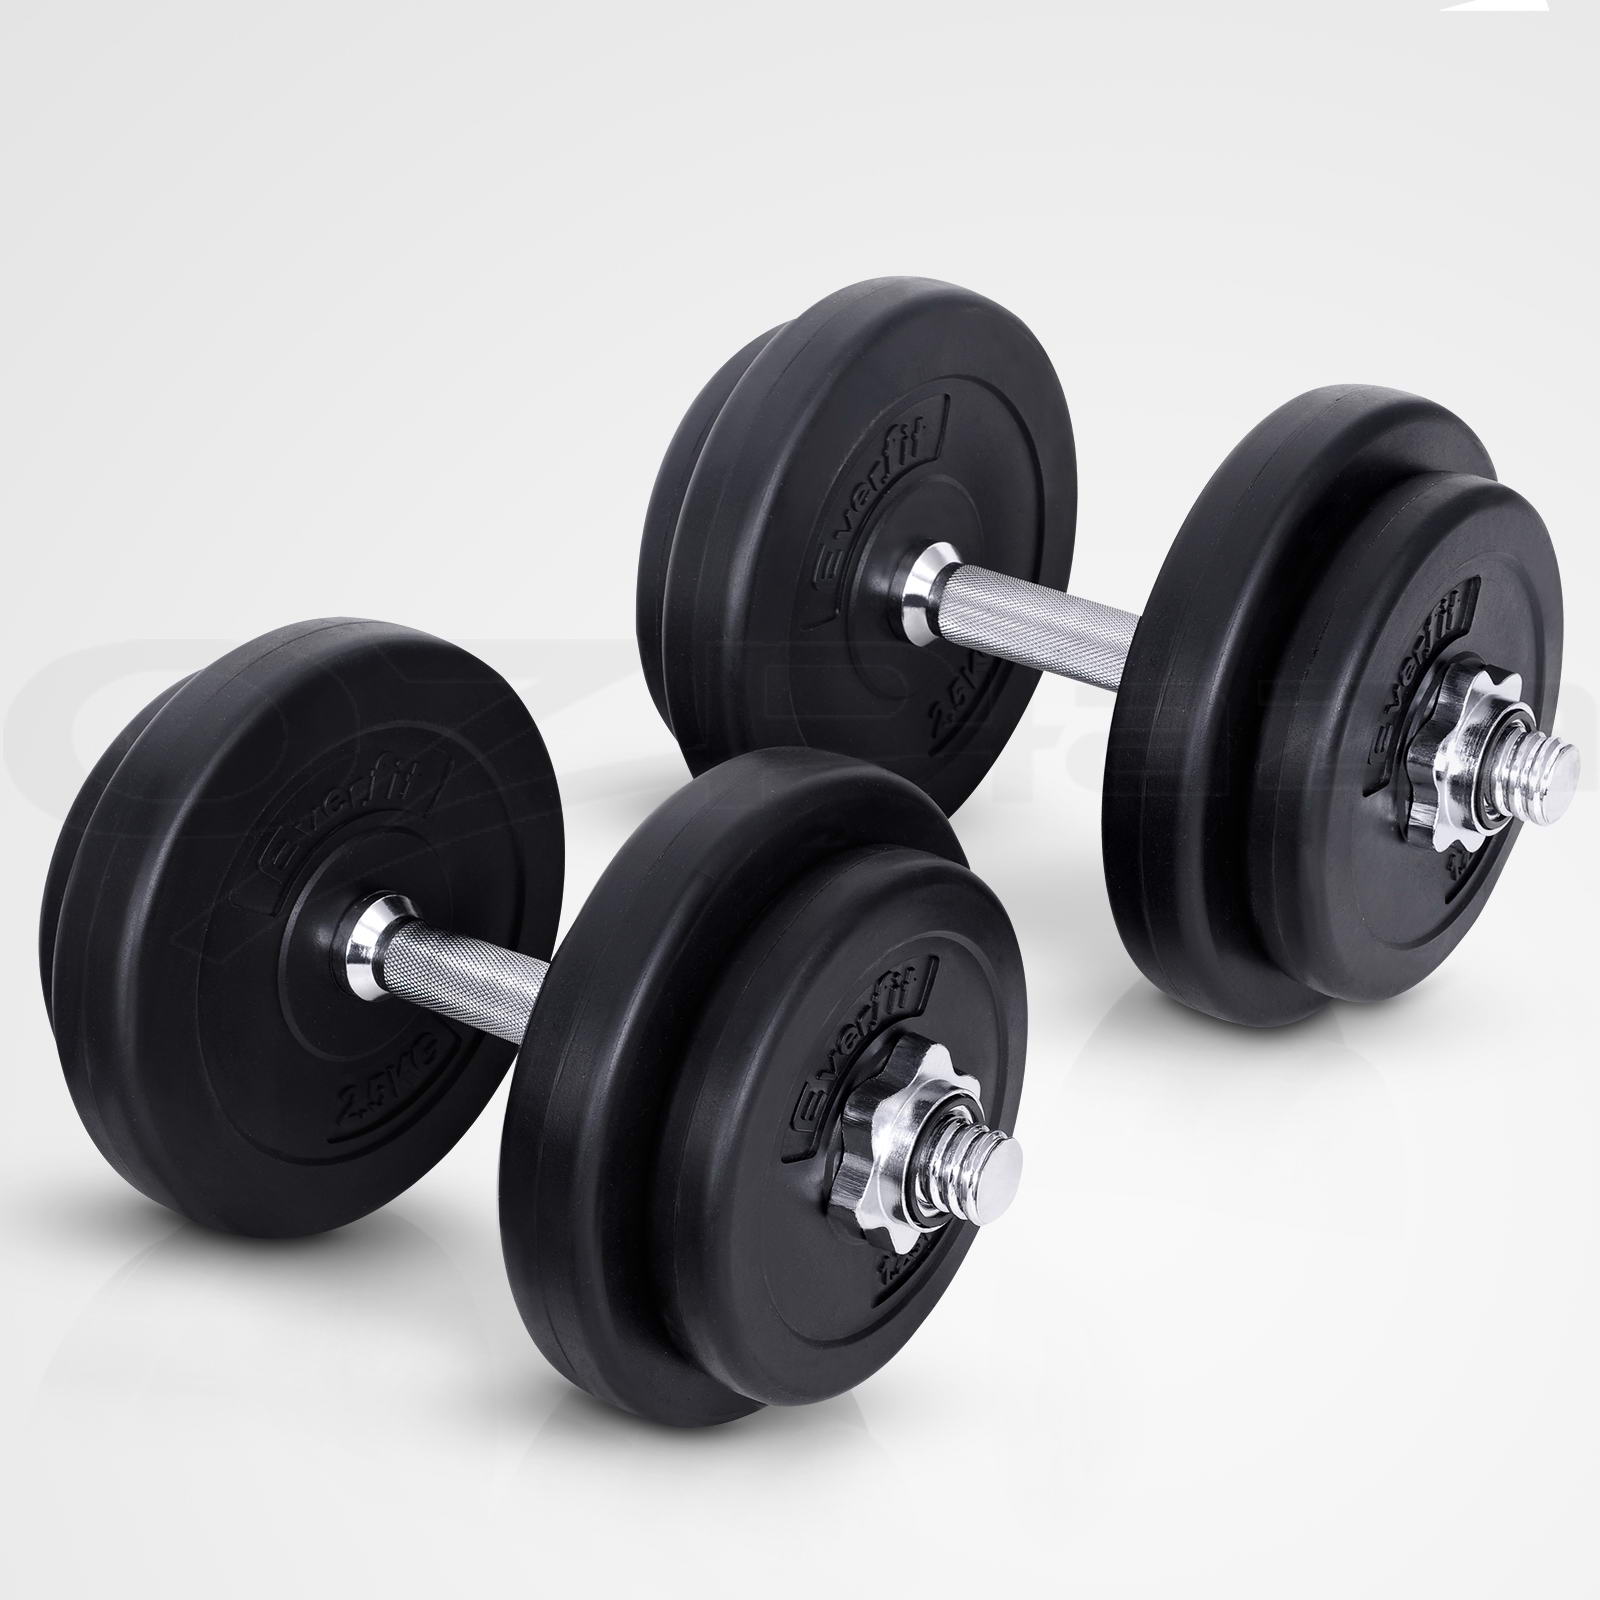 Everfit Dumbbell Set Weight Dumbbells Plates Home Gym Fitness Exercise 20kg Ebay